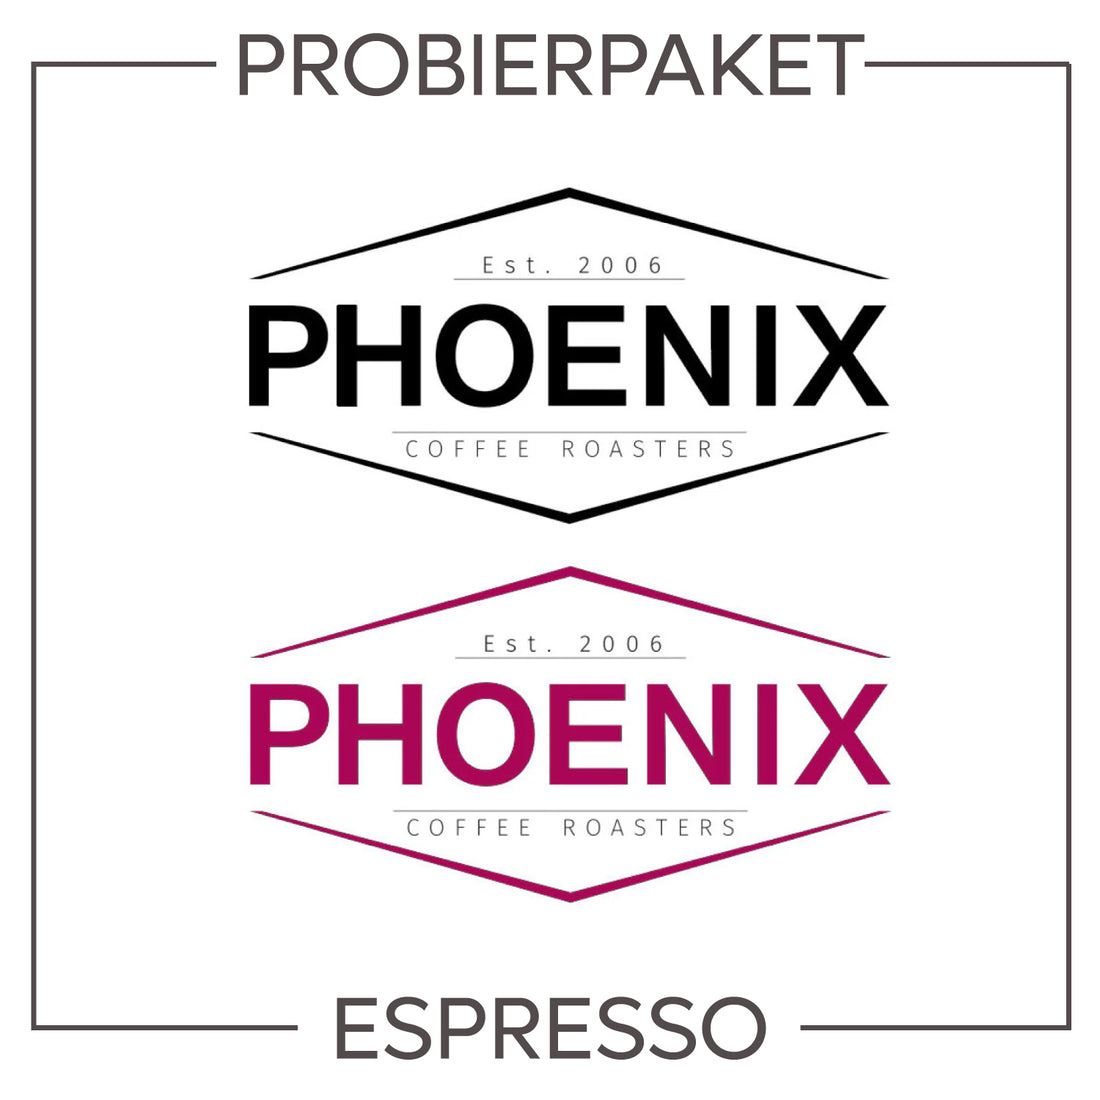 Probierpaket-espresso-phoenix